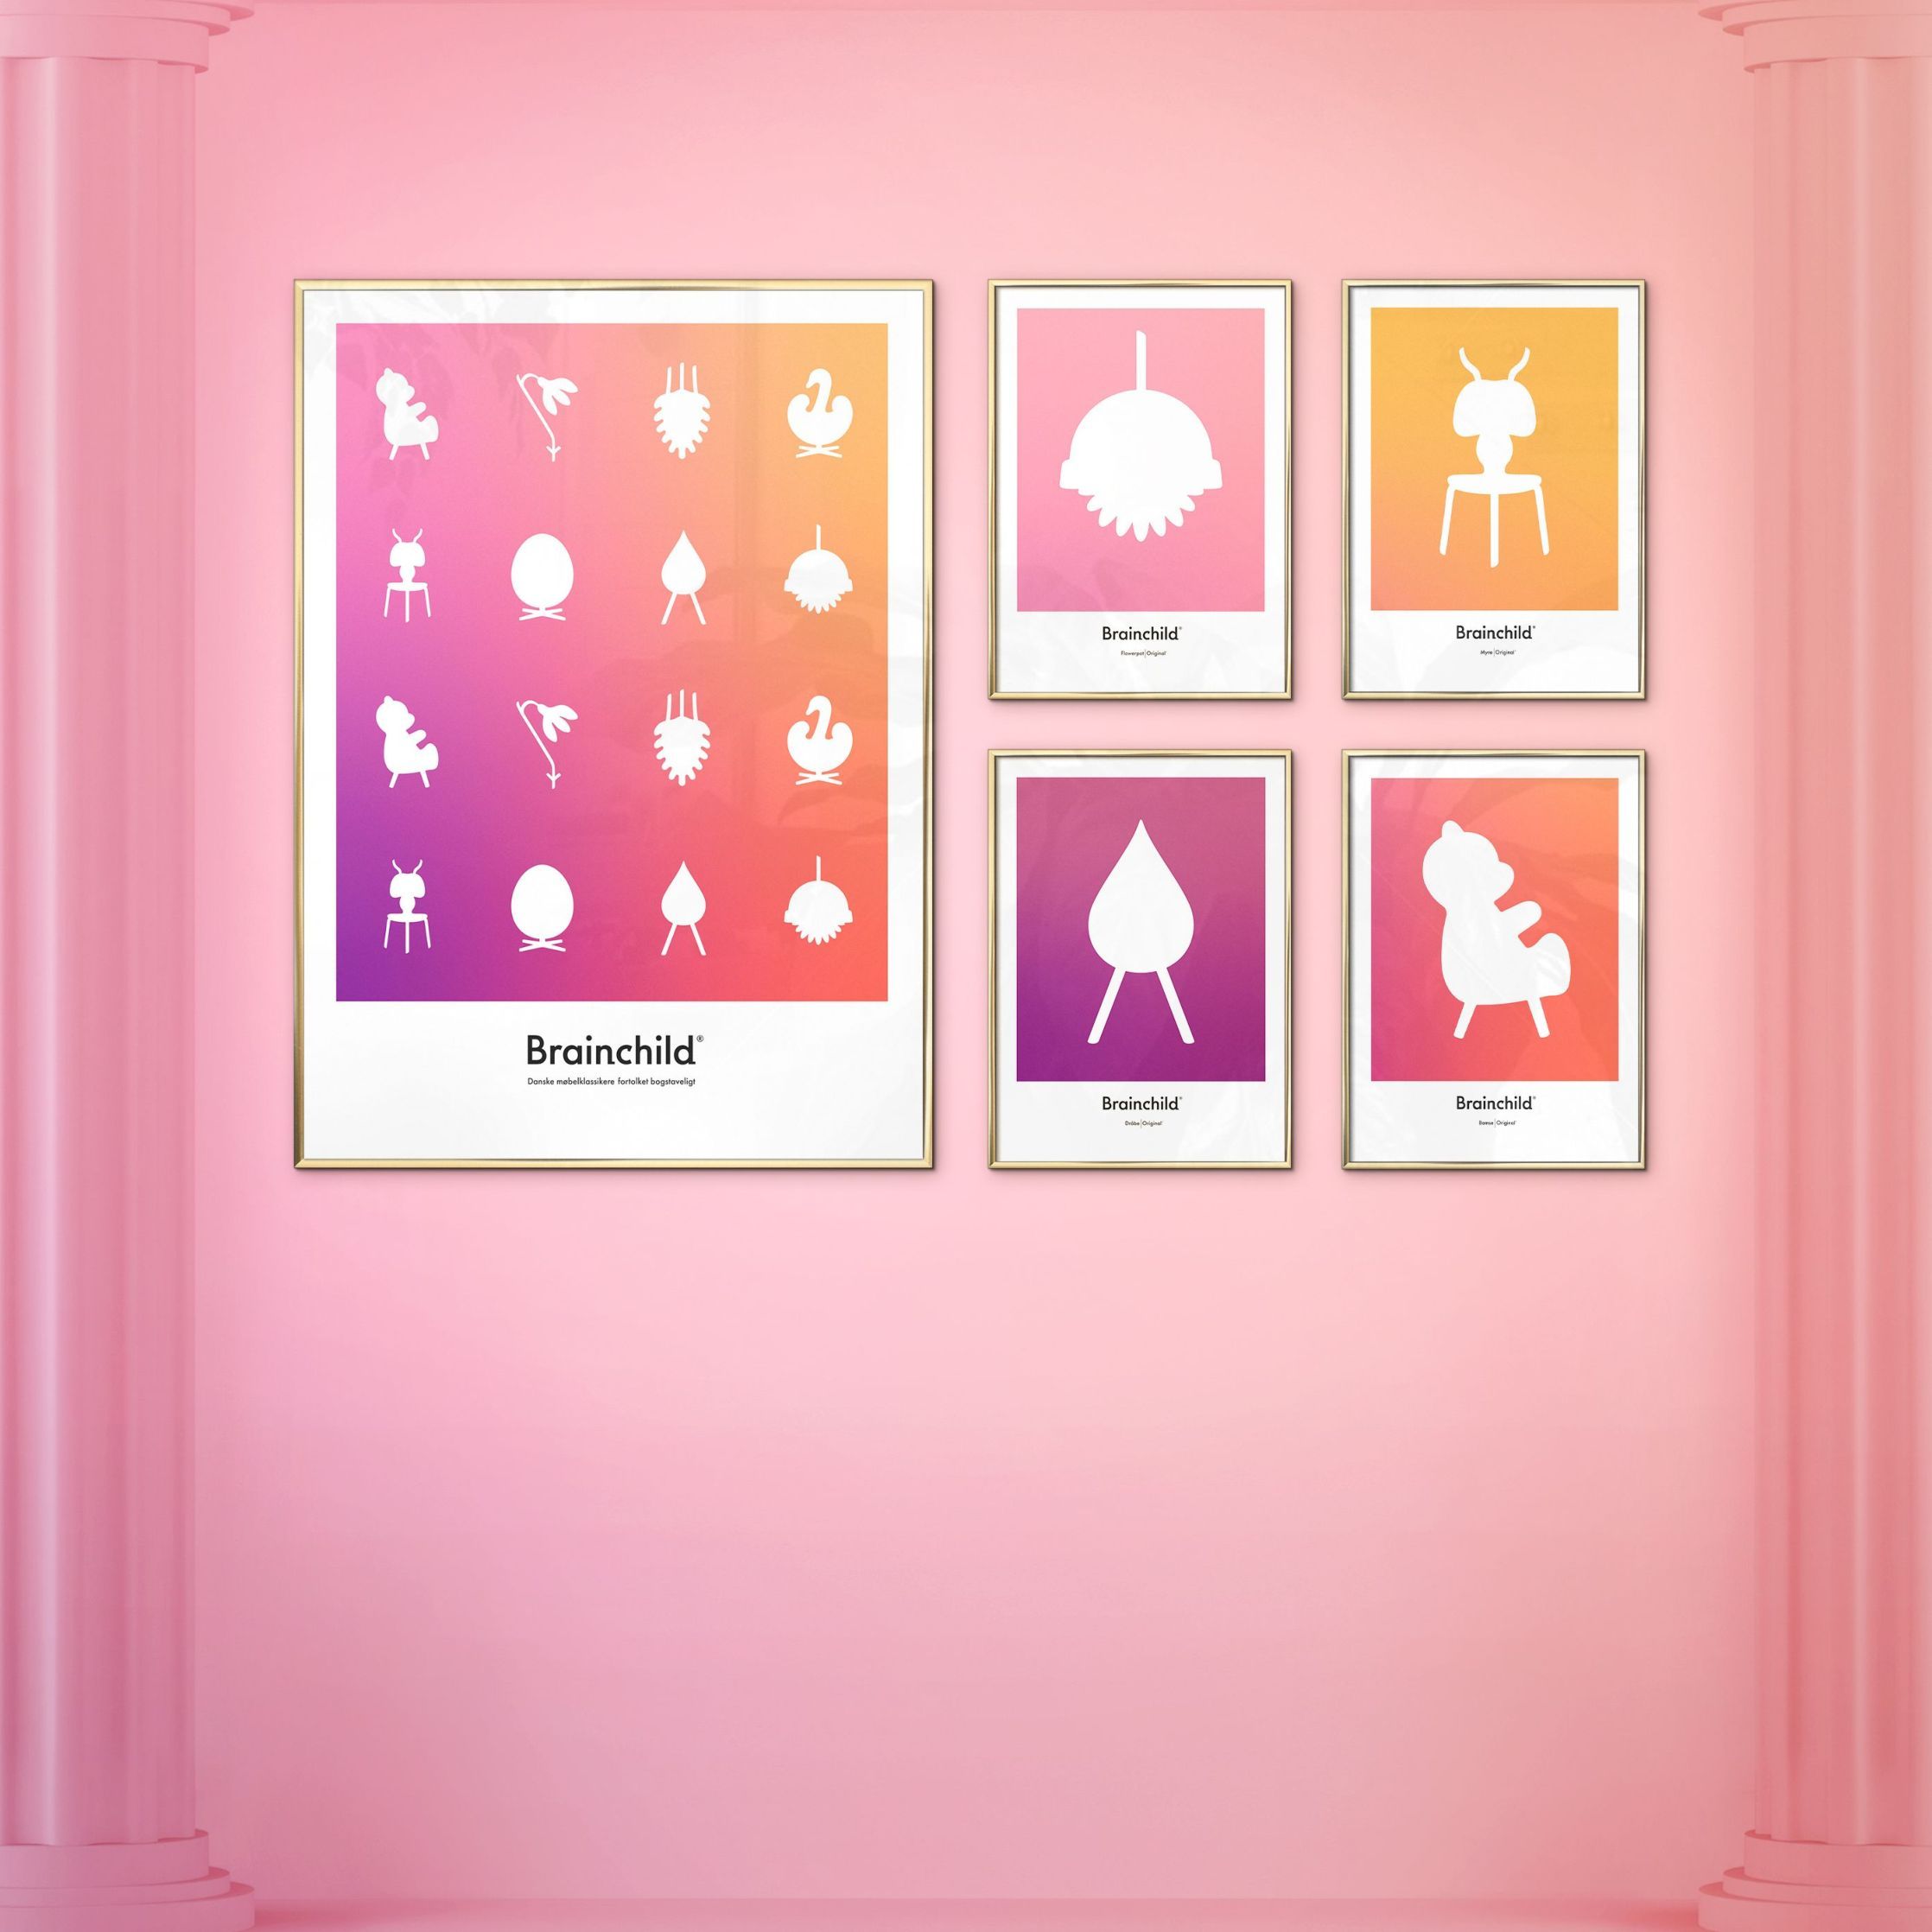 Brainchild Flowerpot Design Icon Poster Without Frame 30 X40 Cm, Pink